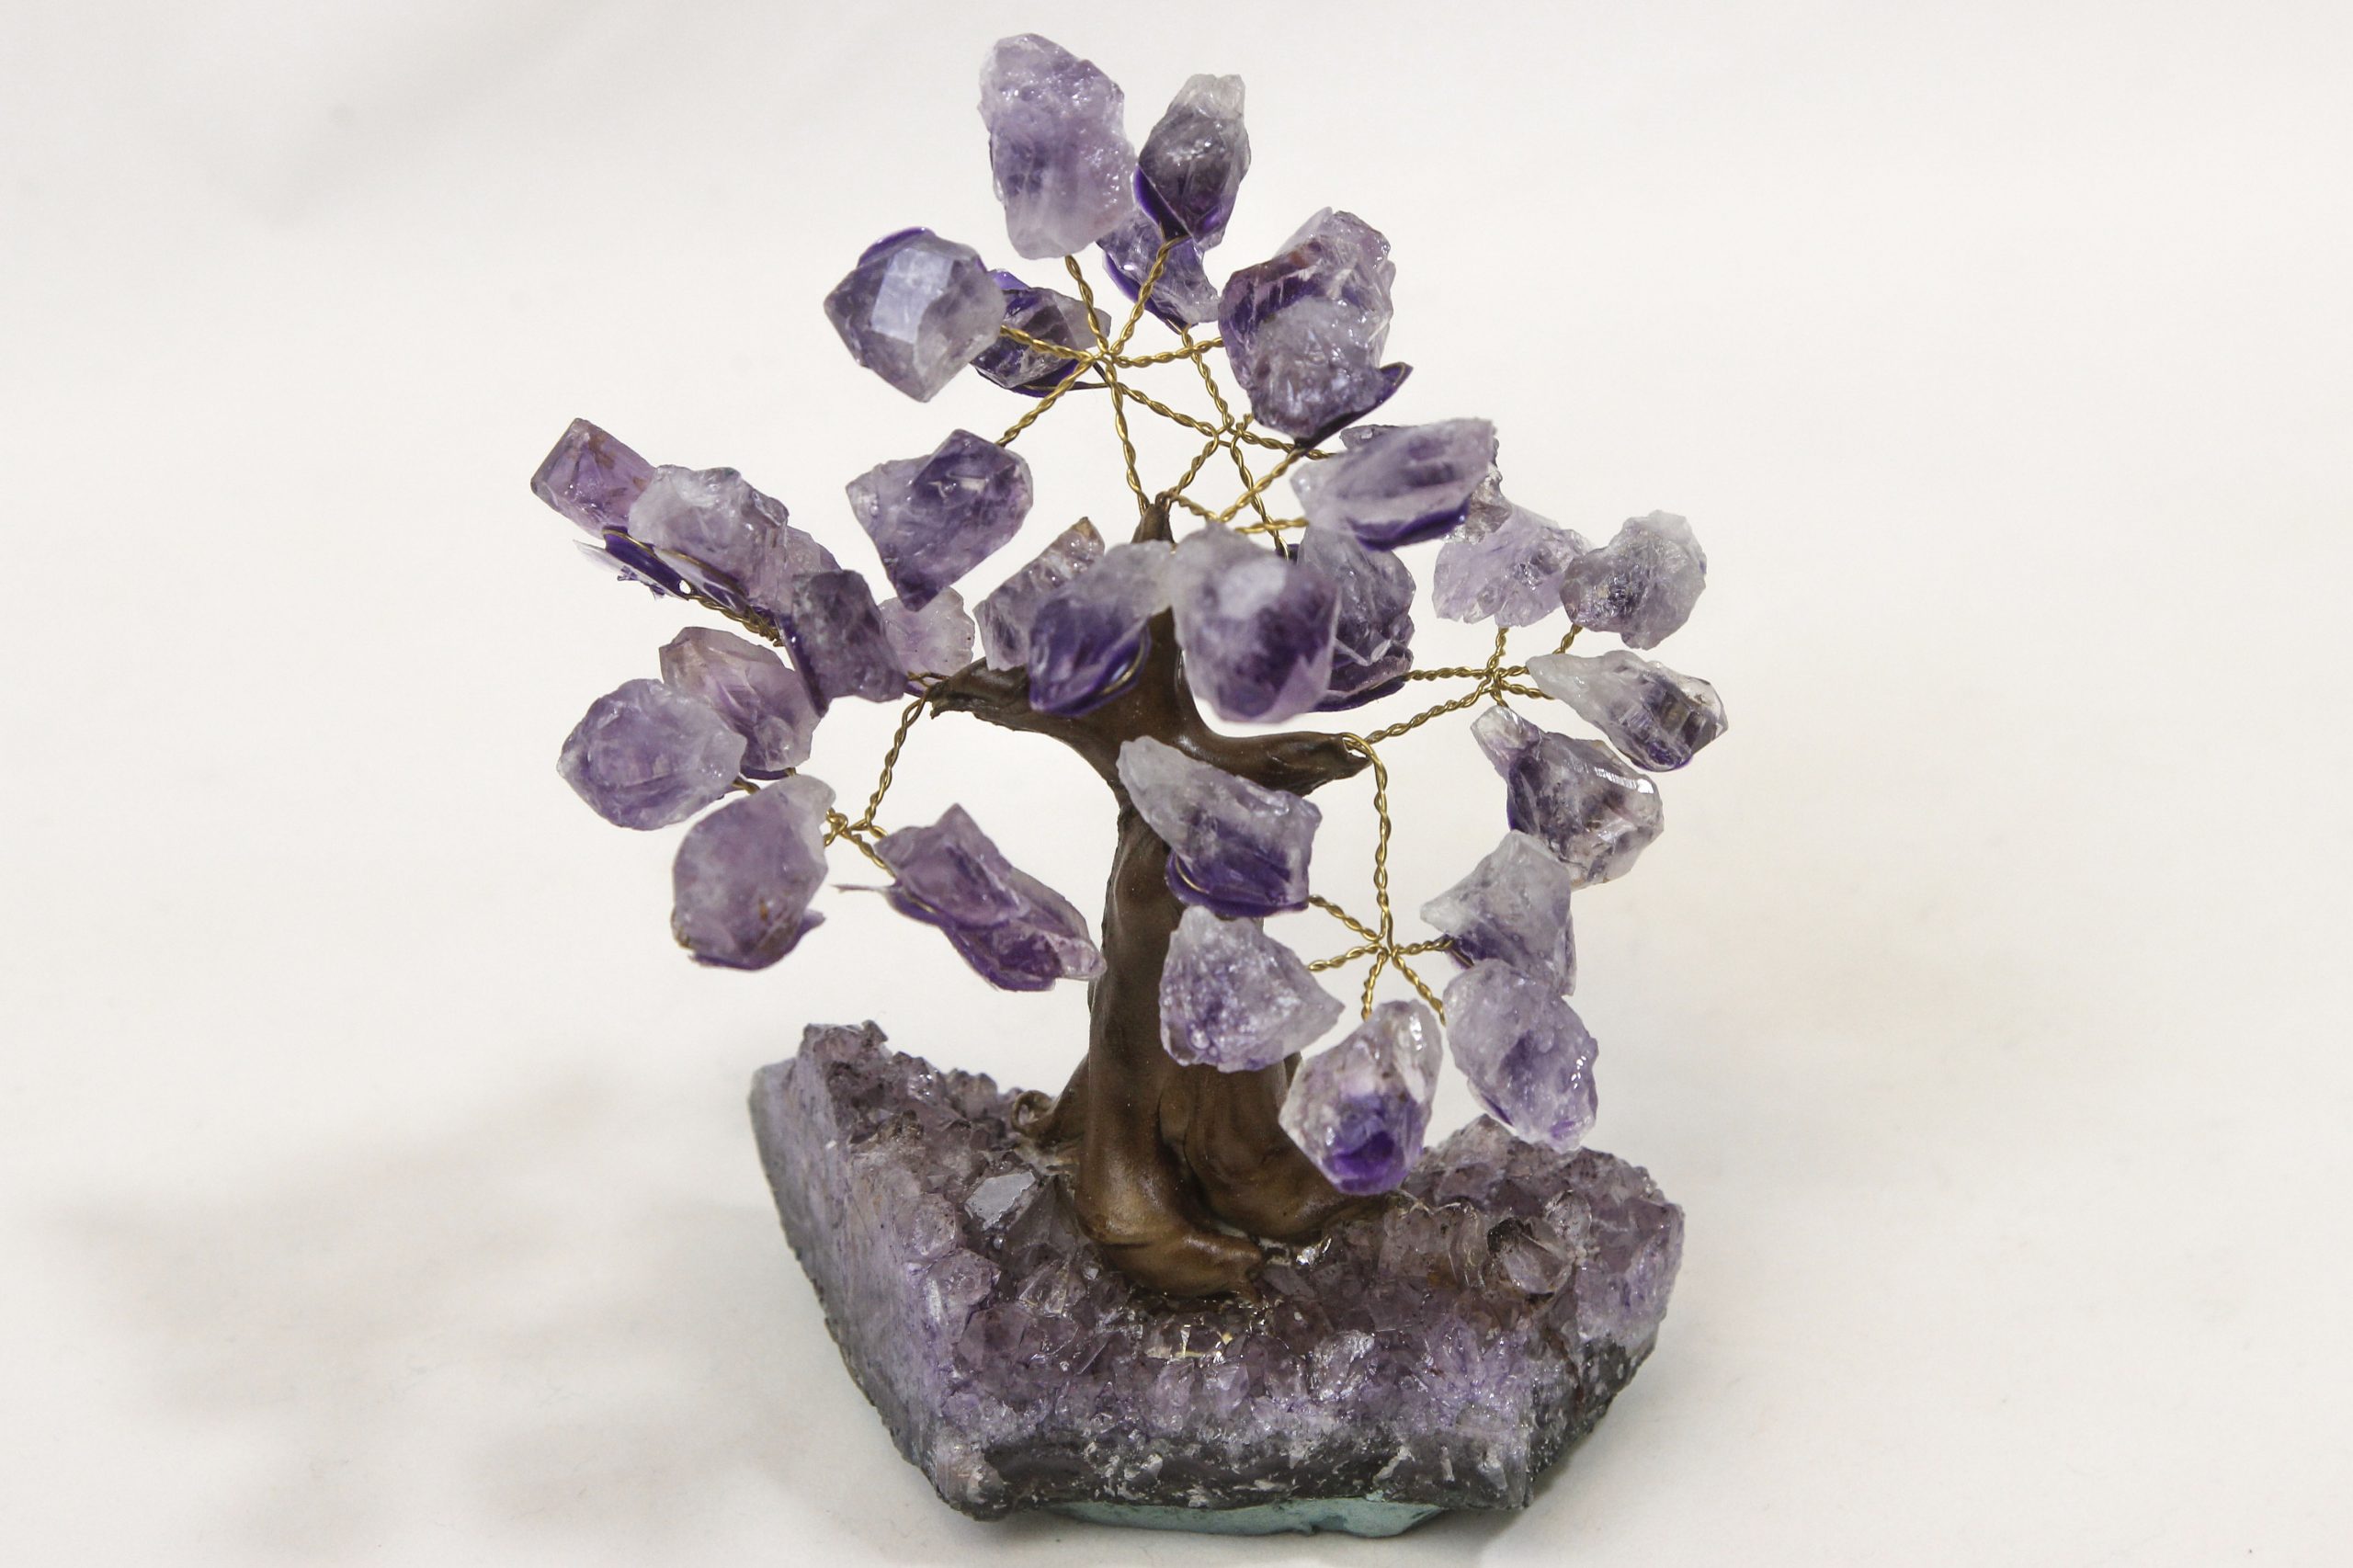 Small Amethyst Gemstone Tree with Amethyst Base - Kids Love Rocks